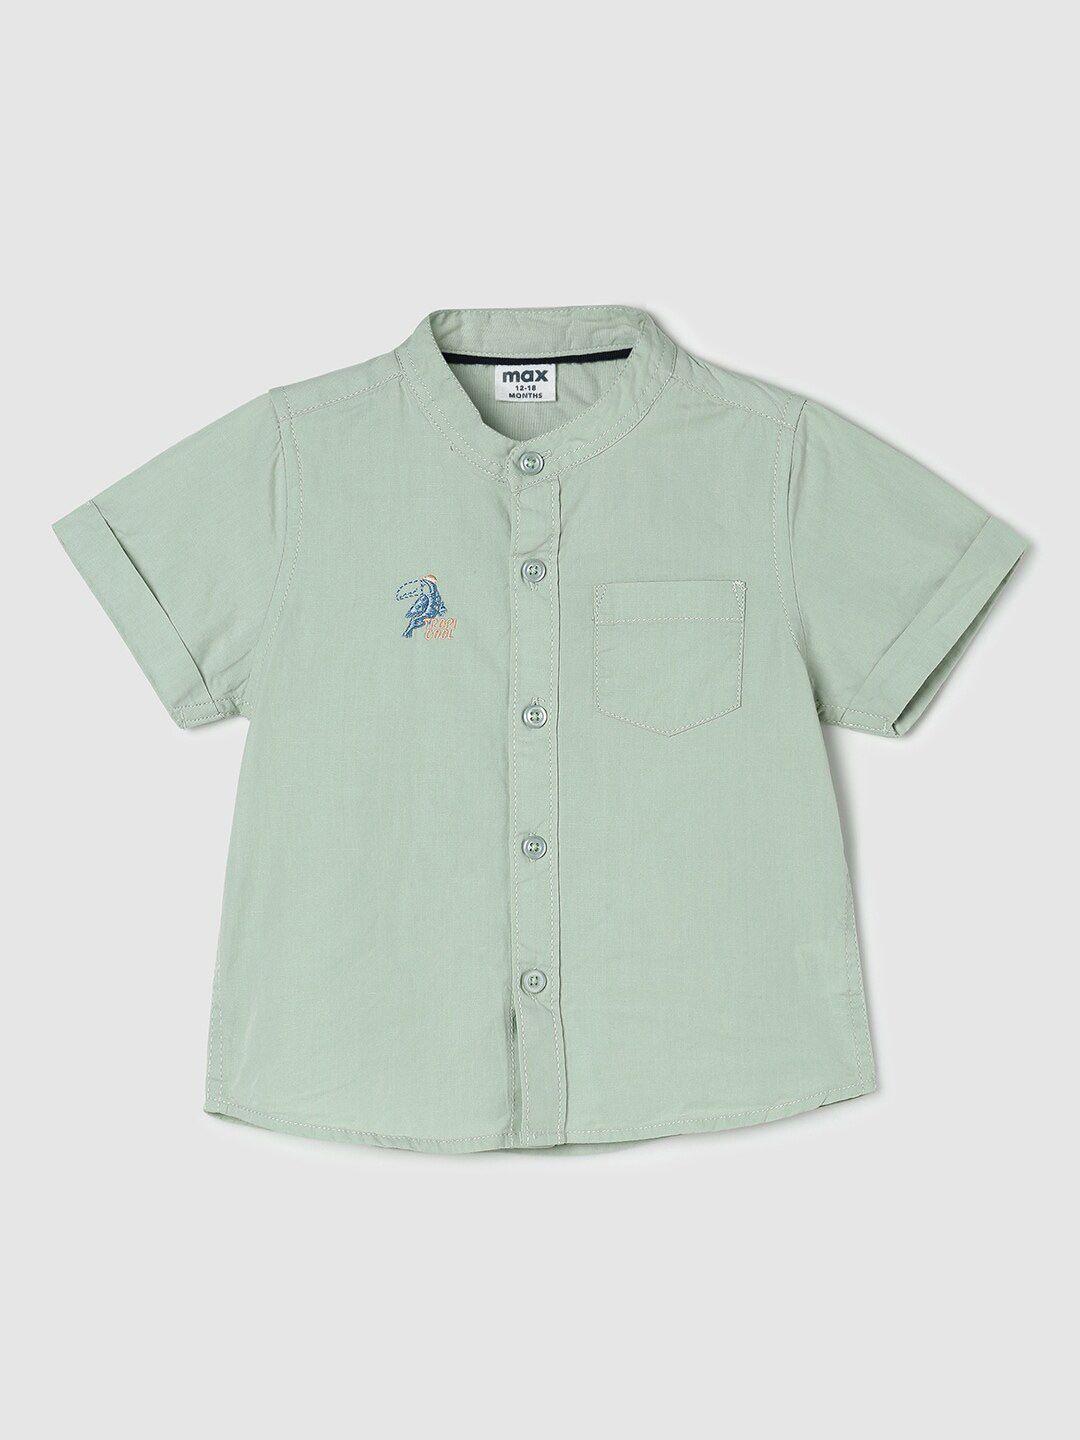 max infant boys mandarin collar cotton casual shirt